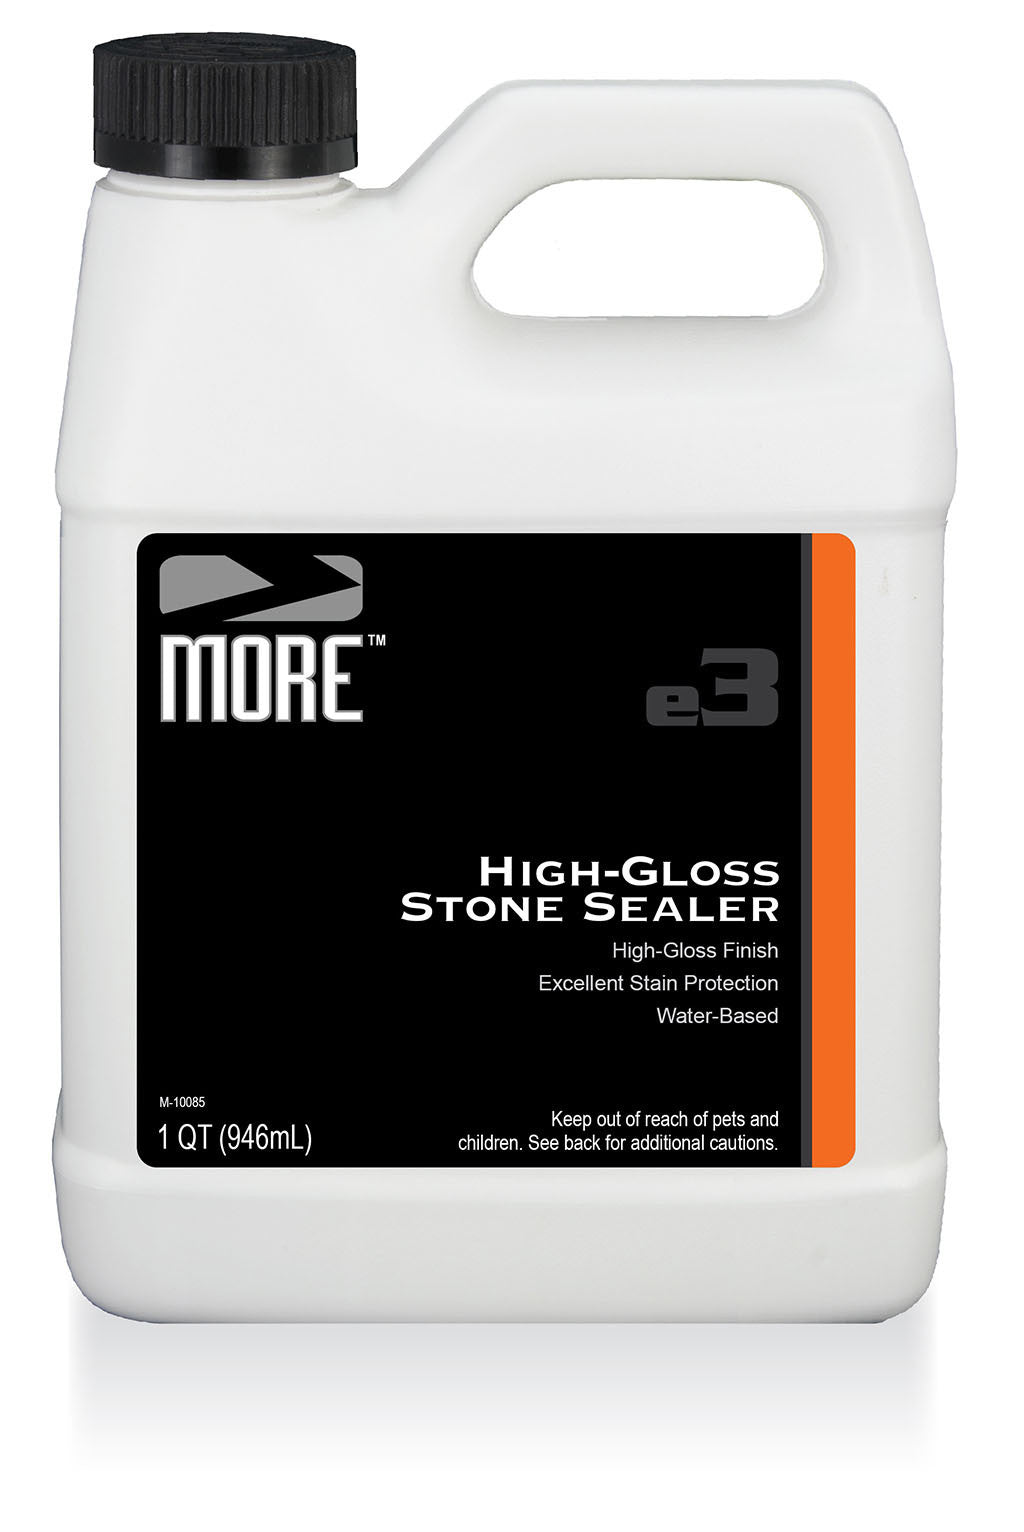 Stone Pro Stone Gloss - High Gloss Acrylic Sealer - 1 Gallon